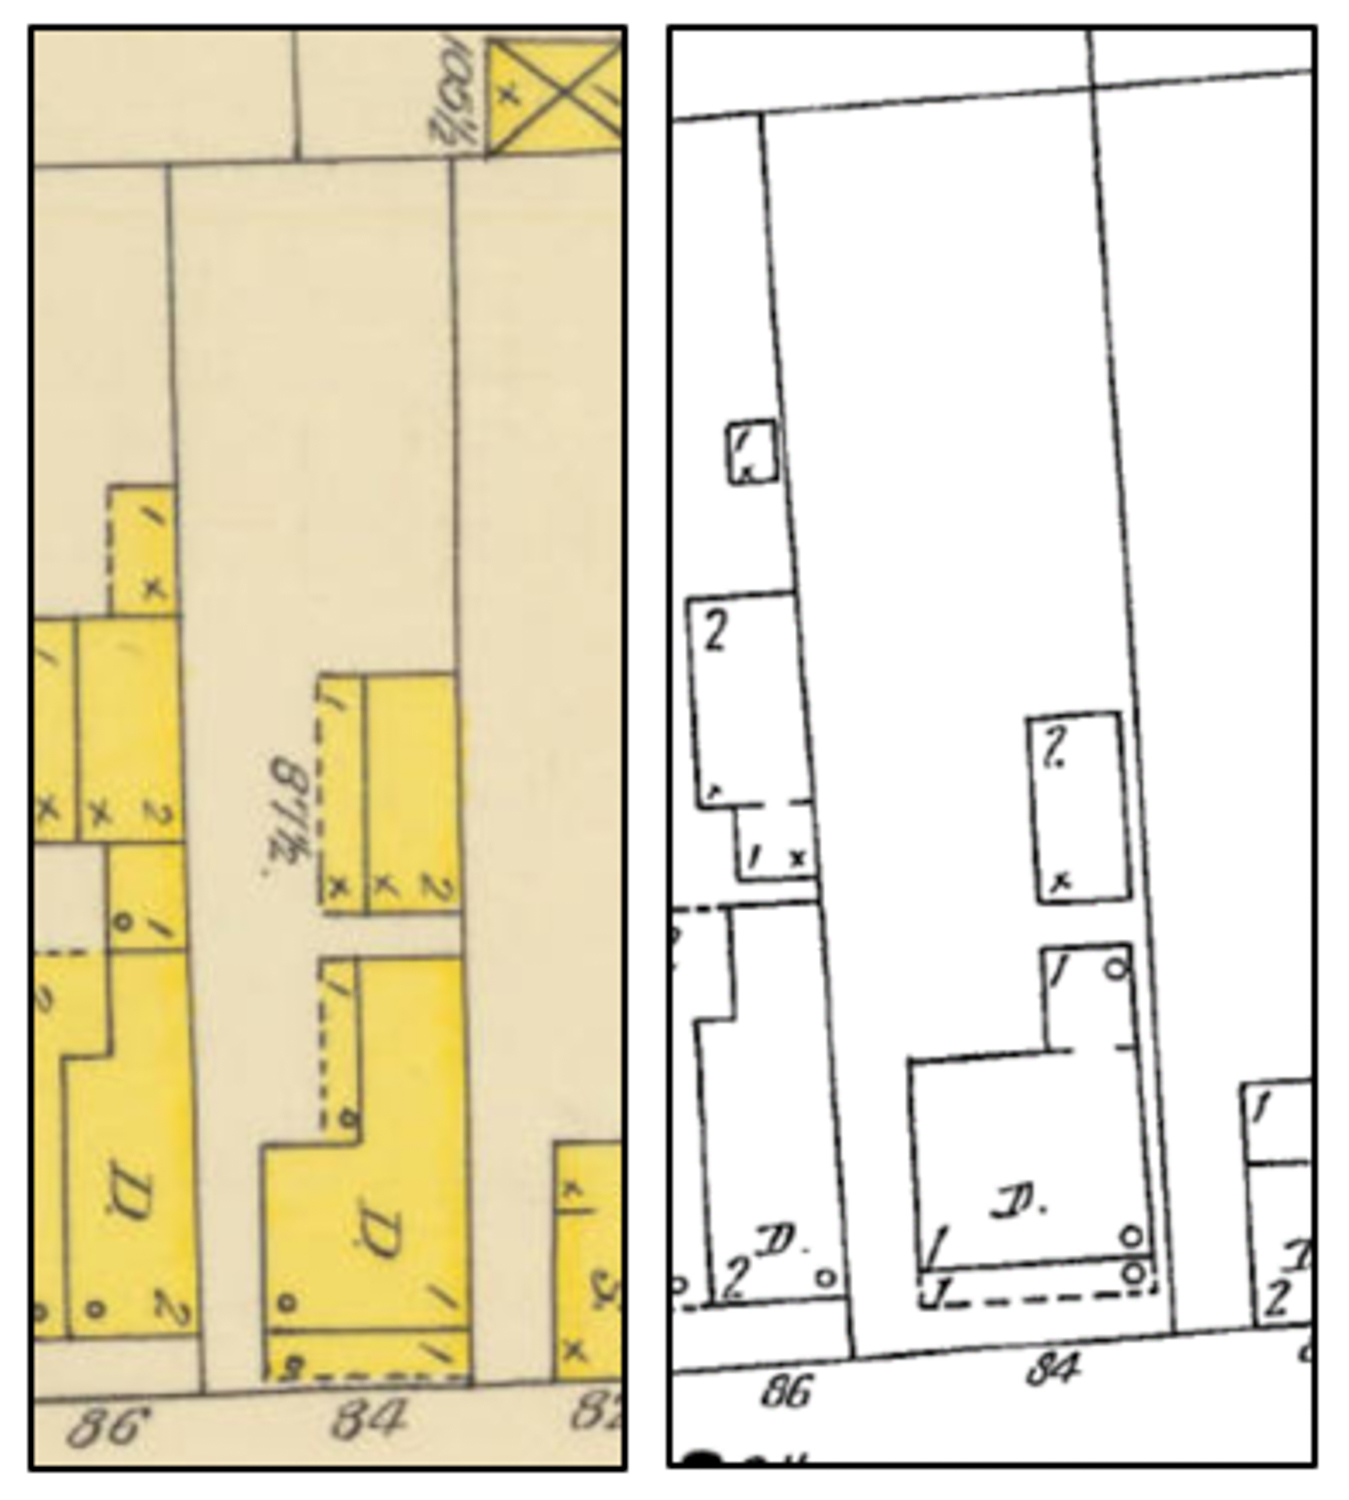 1888 & 1902 SANBORN MAP DIAGRAMS OF SUBJECT